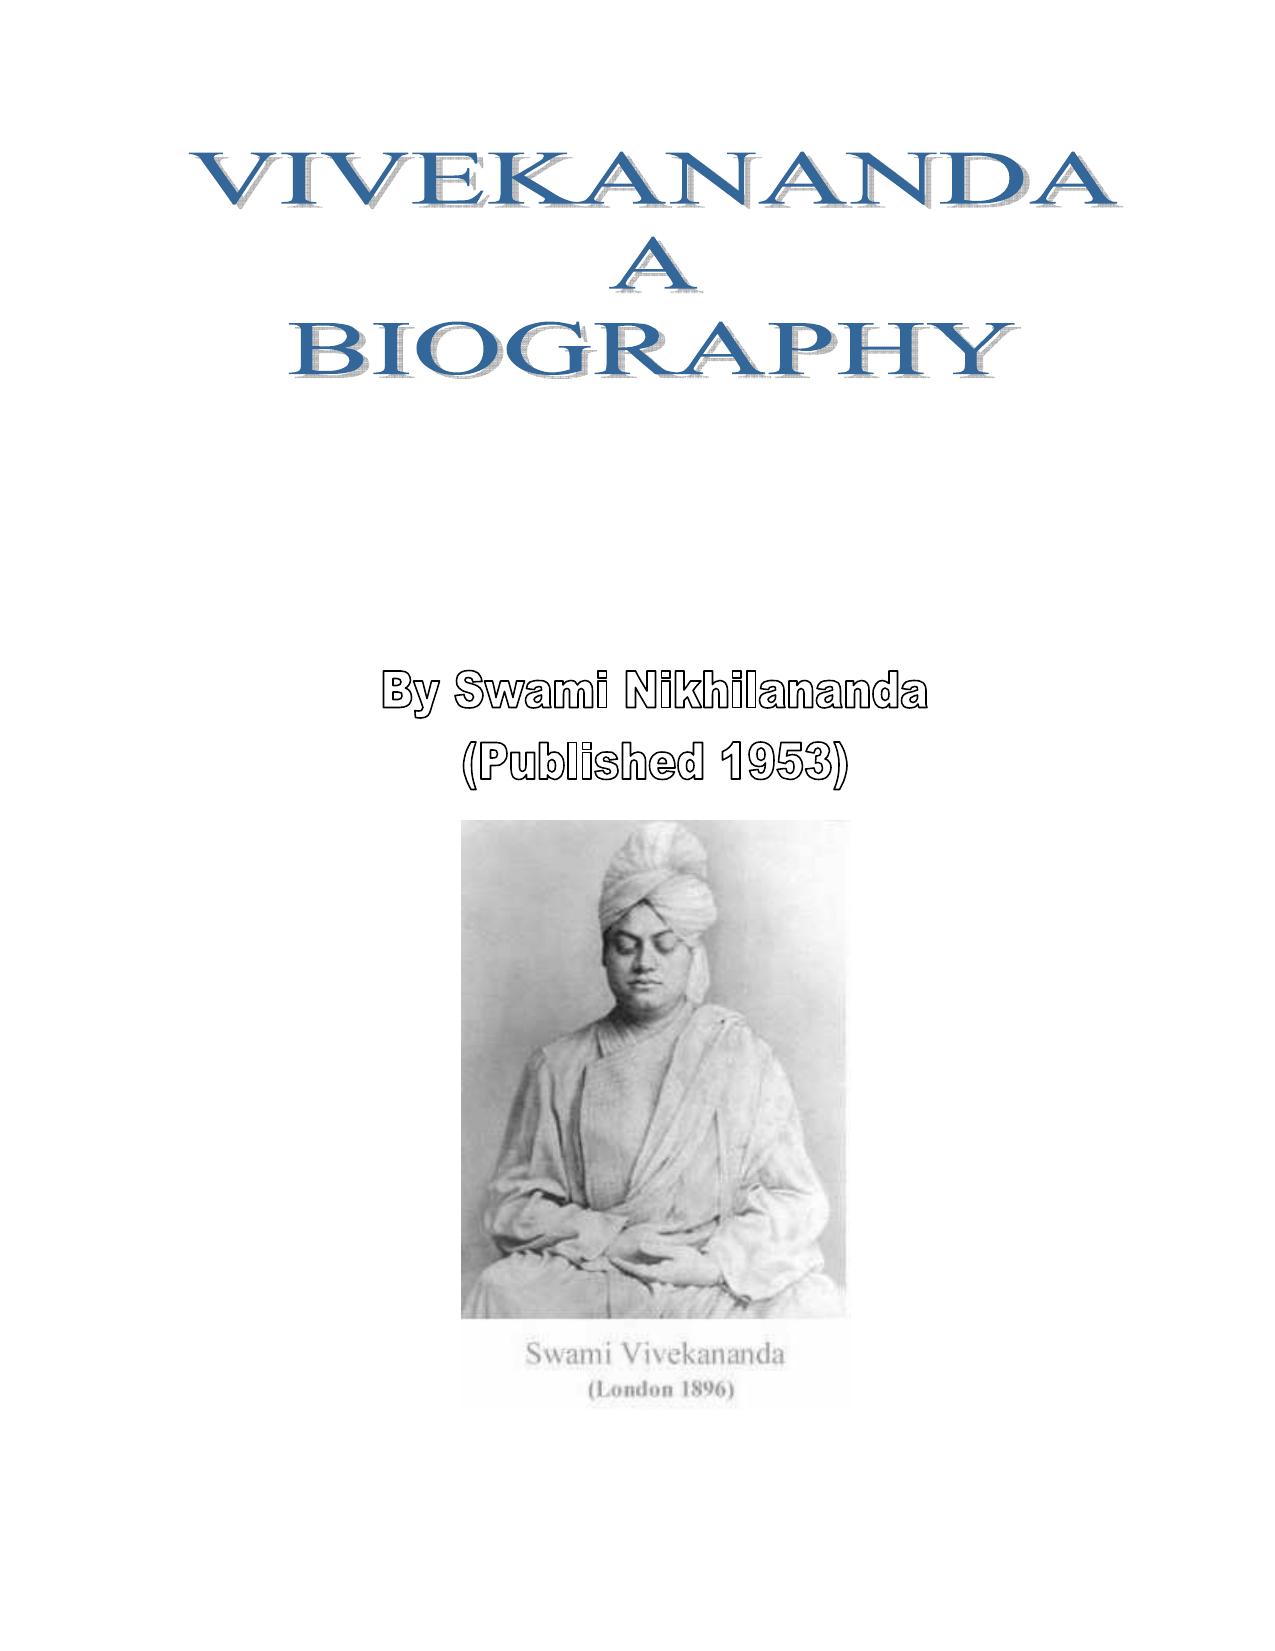 biography of swami vivekananda pdf download